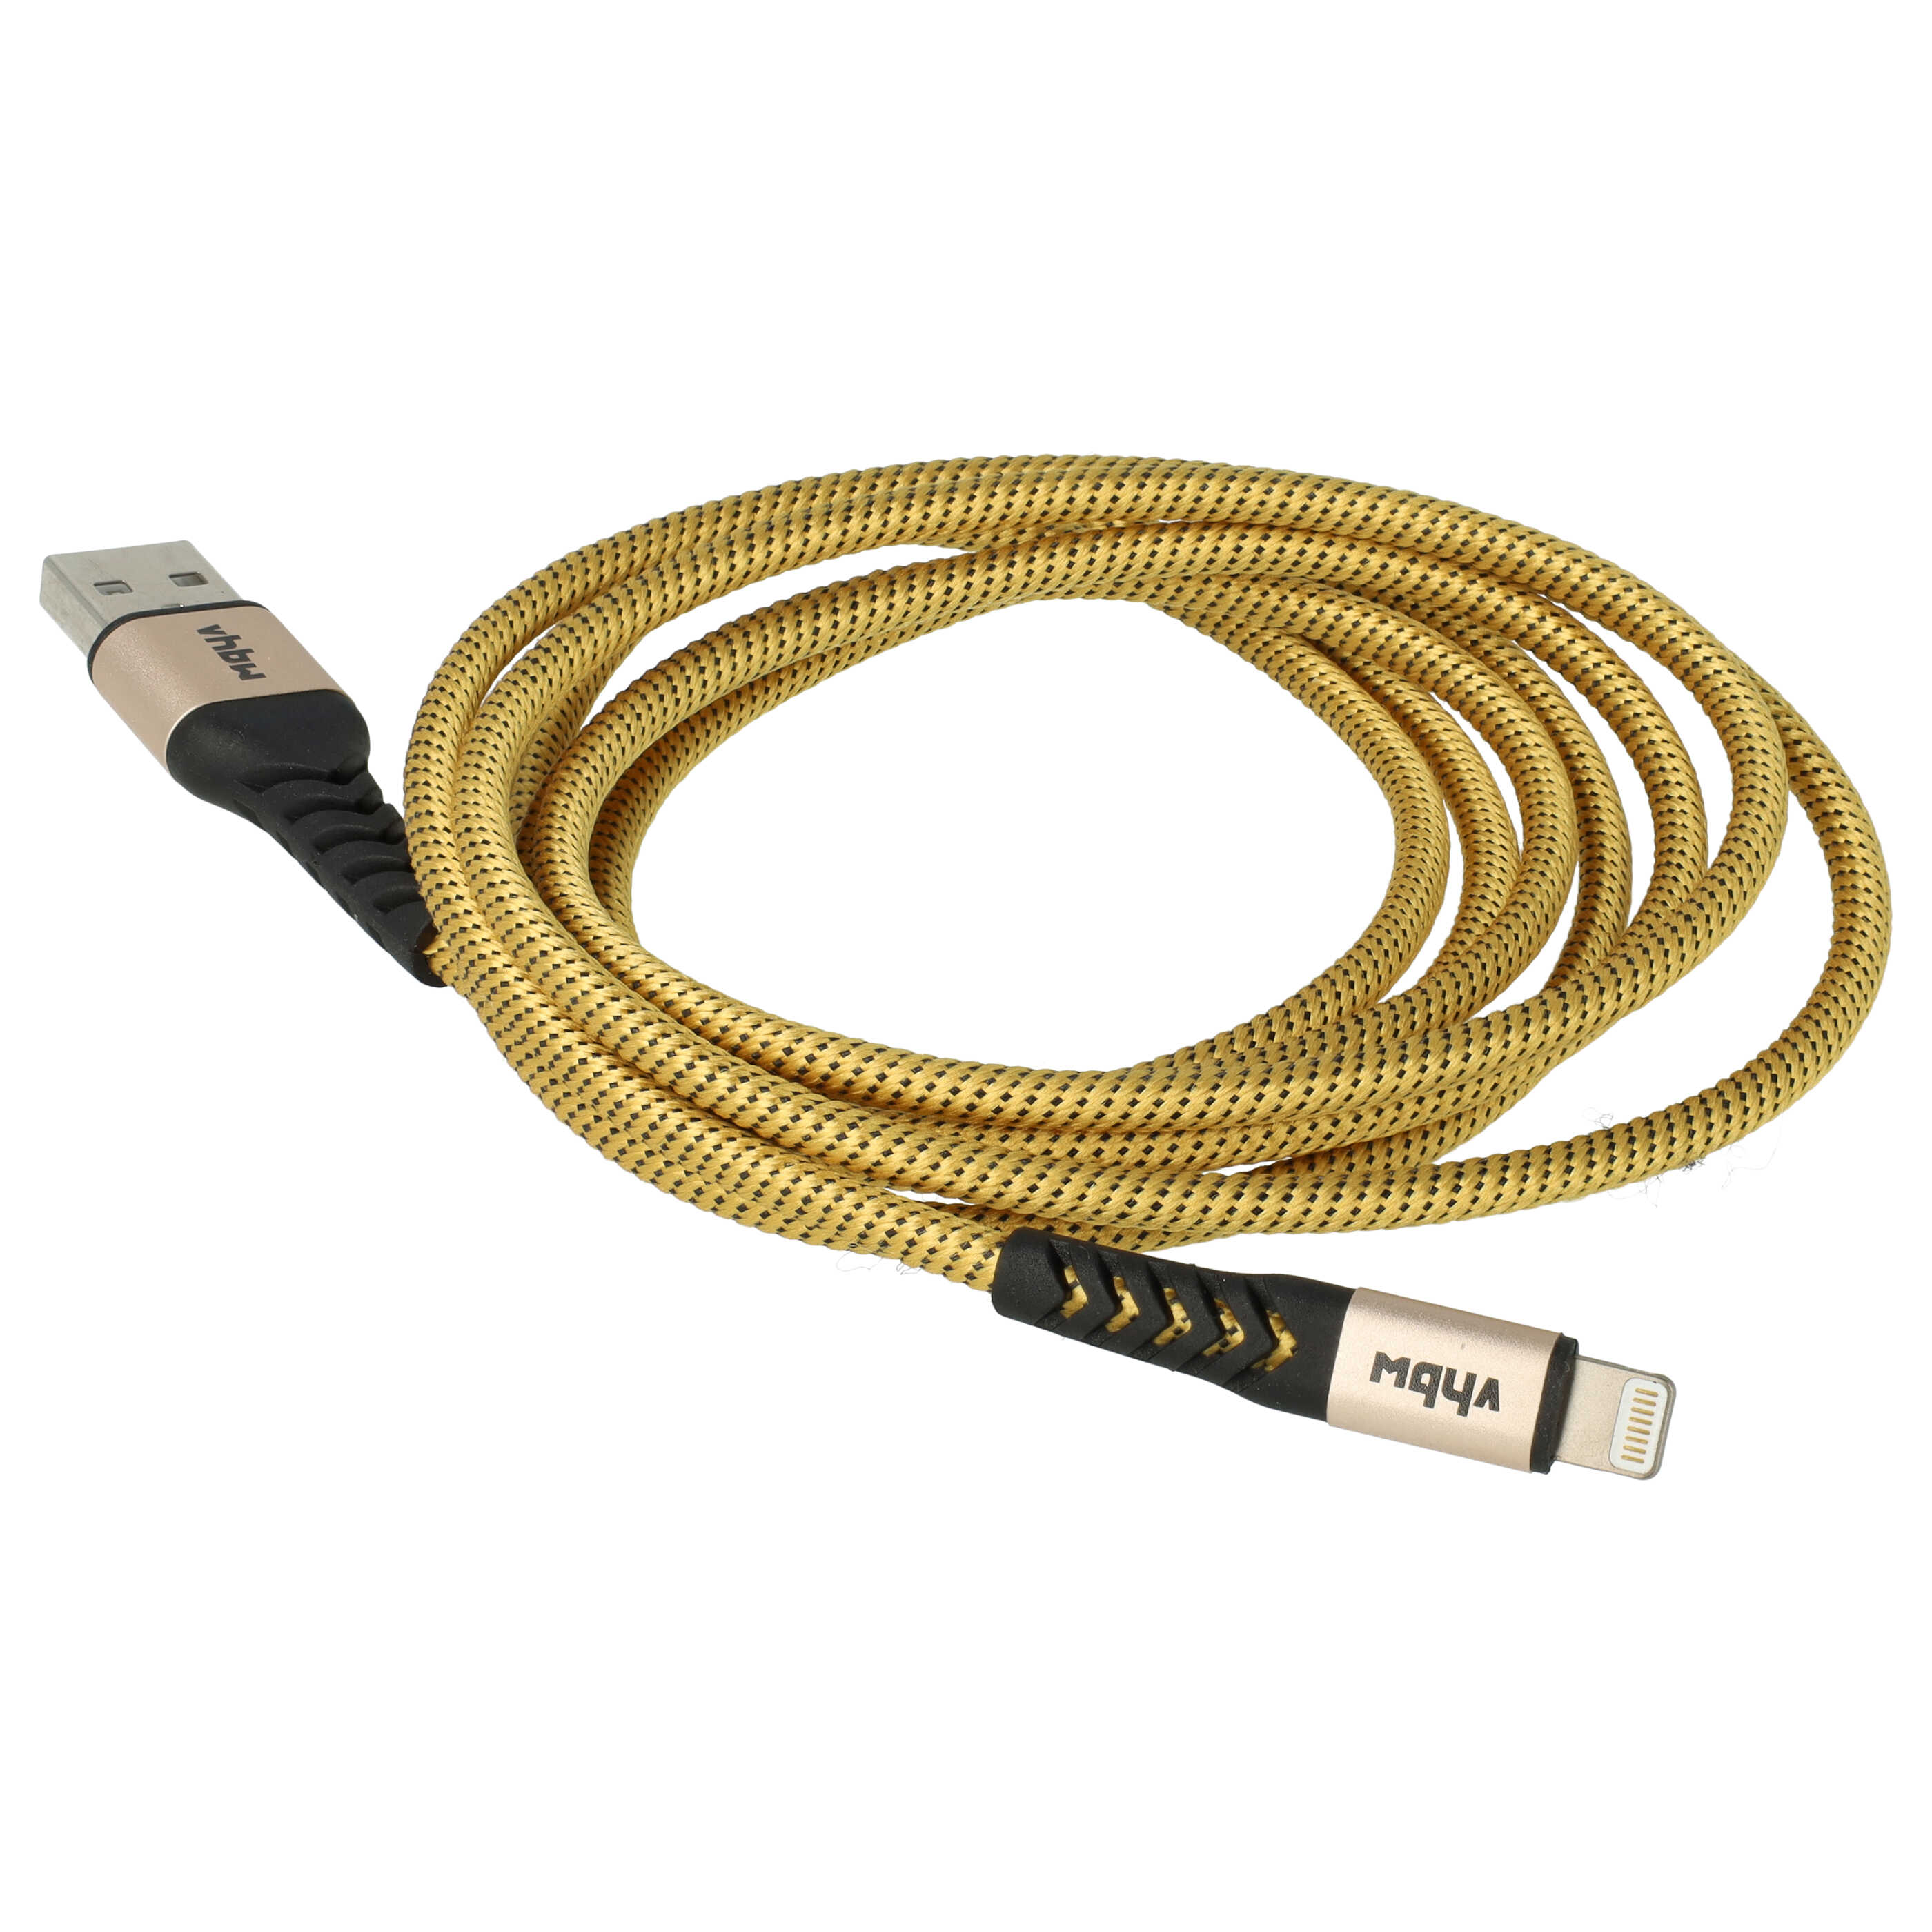 Câble Lightning vers USB A pour iOS - noir / jaune, 180cm